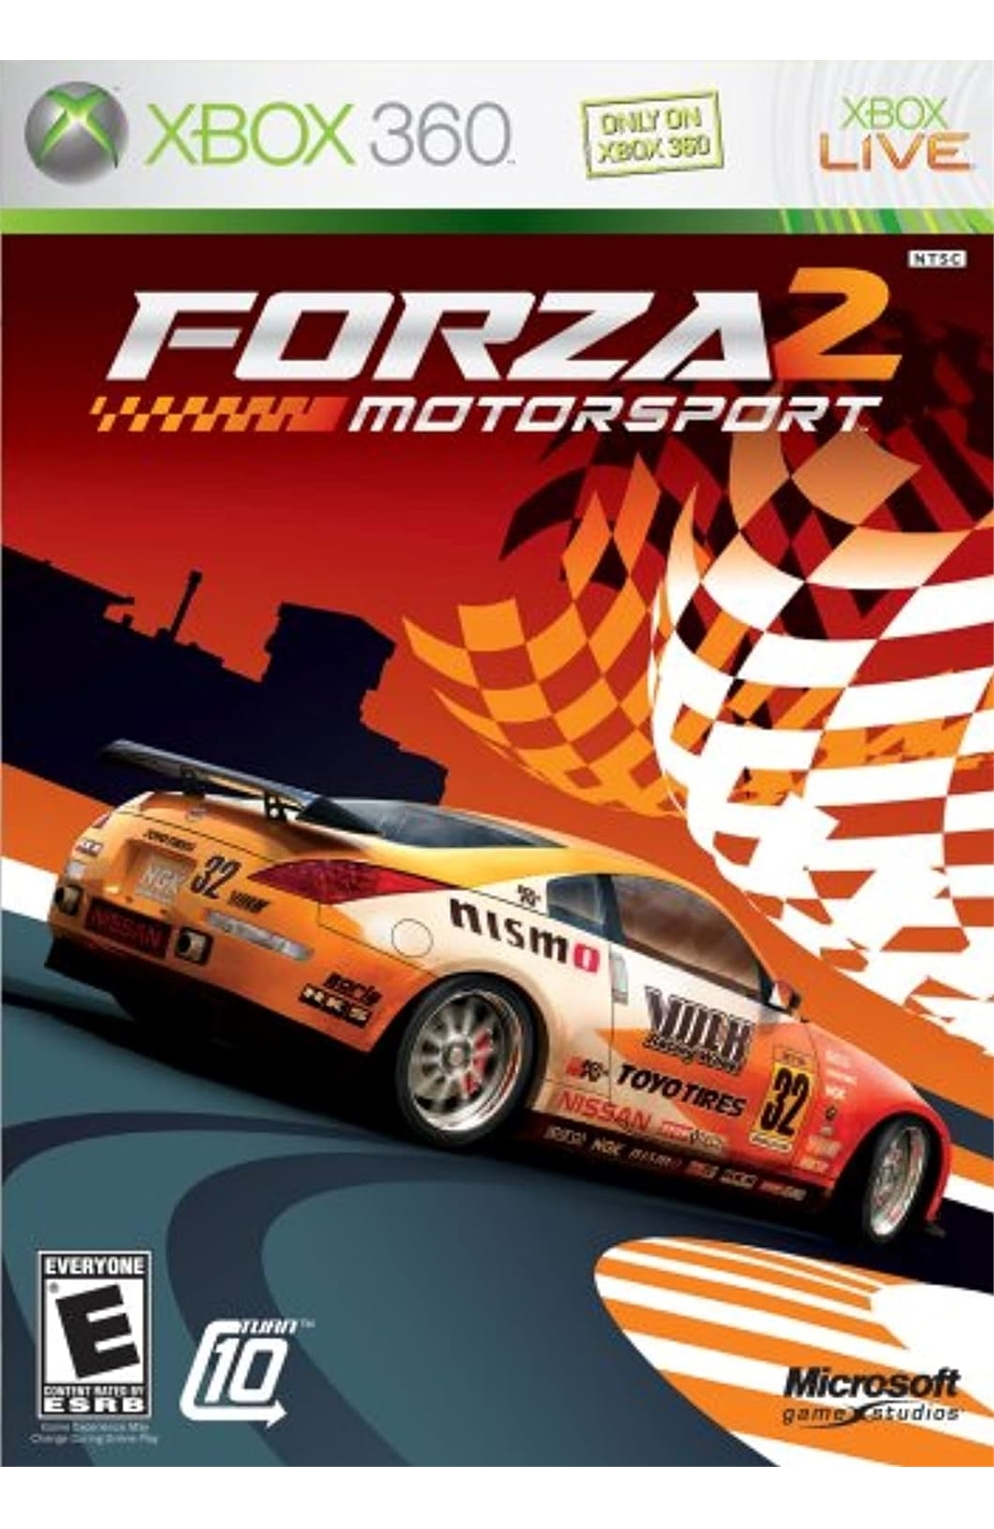 Xbox 360 Xb360 Forza 2 Motorsport 